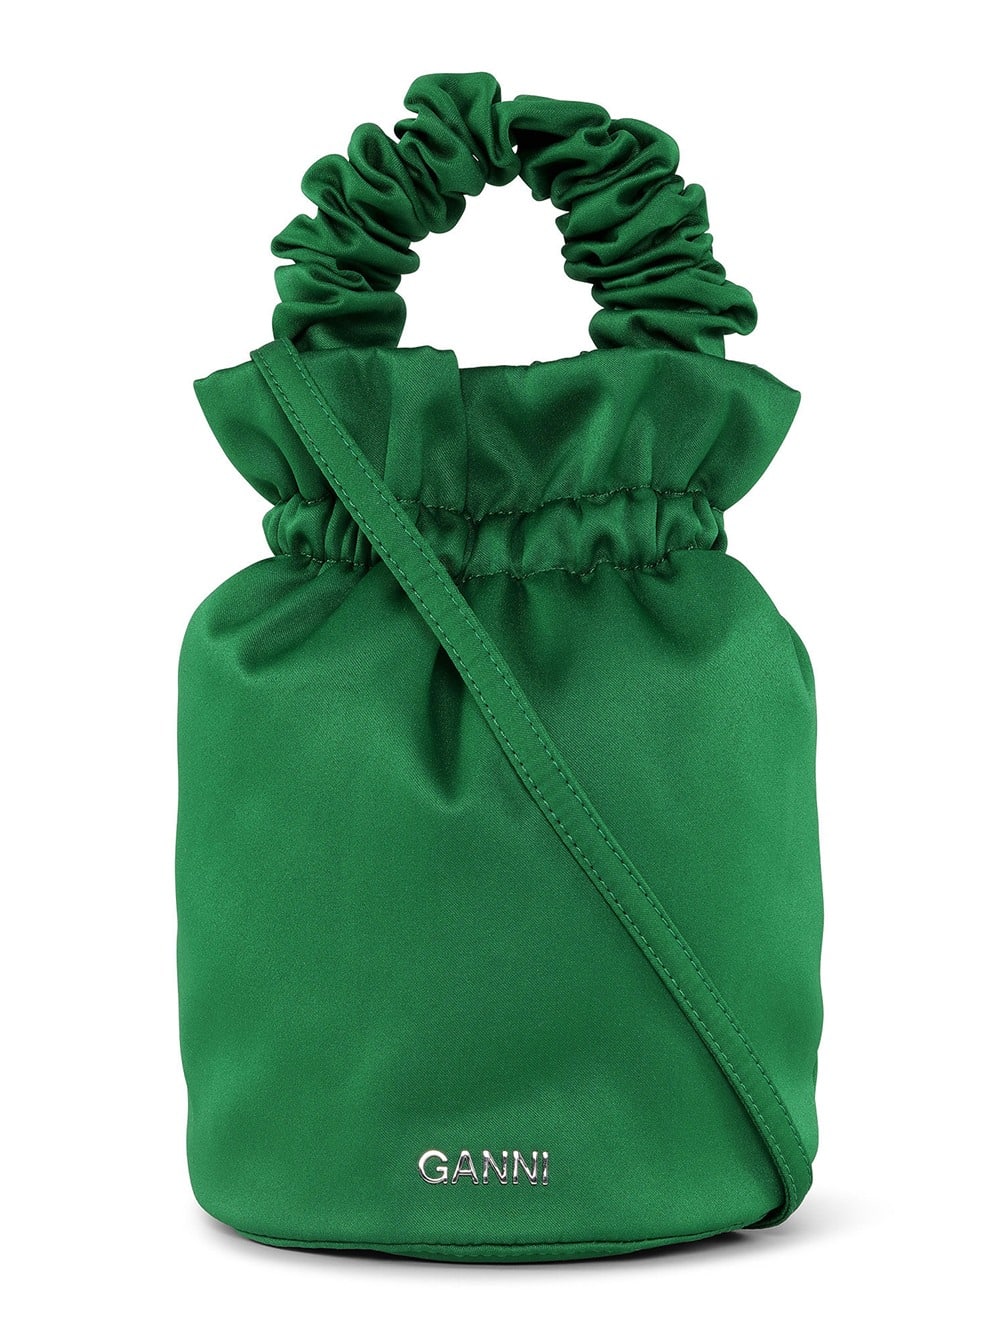 Ganni top handle bag (Size: OS) product